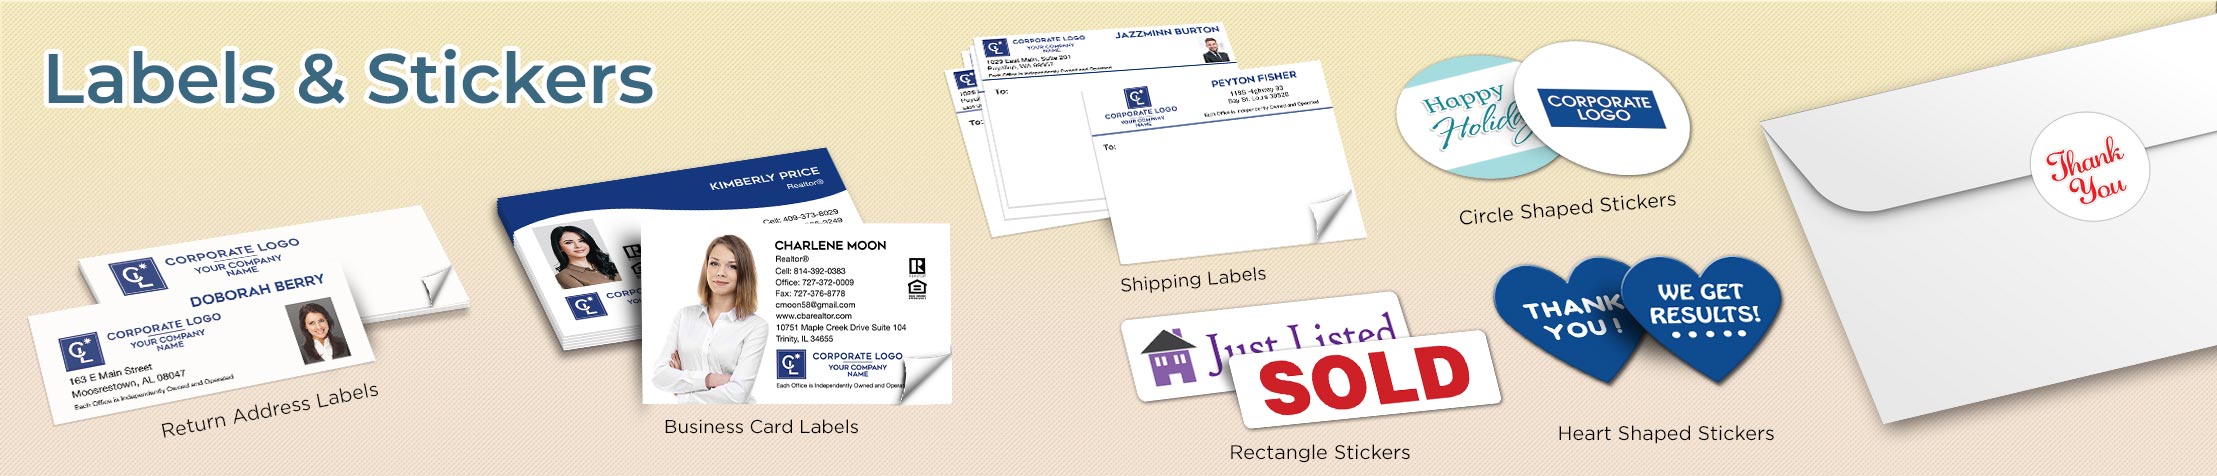 Coldwell Banker Real Estate Labels and Stickers - Coldwell Banker  business card labels, return address labels, shipping labels, and assorted stickers | BestPrintBuy.com